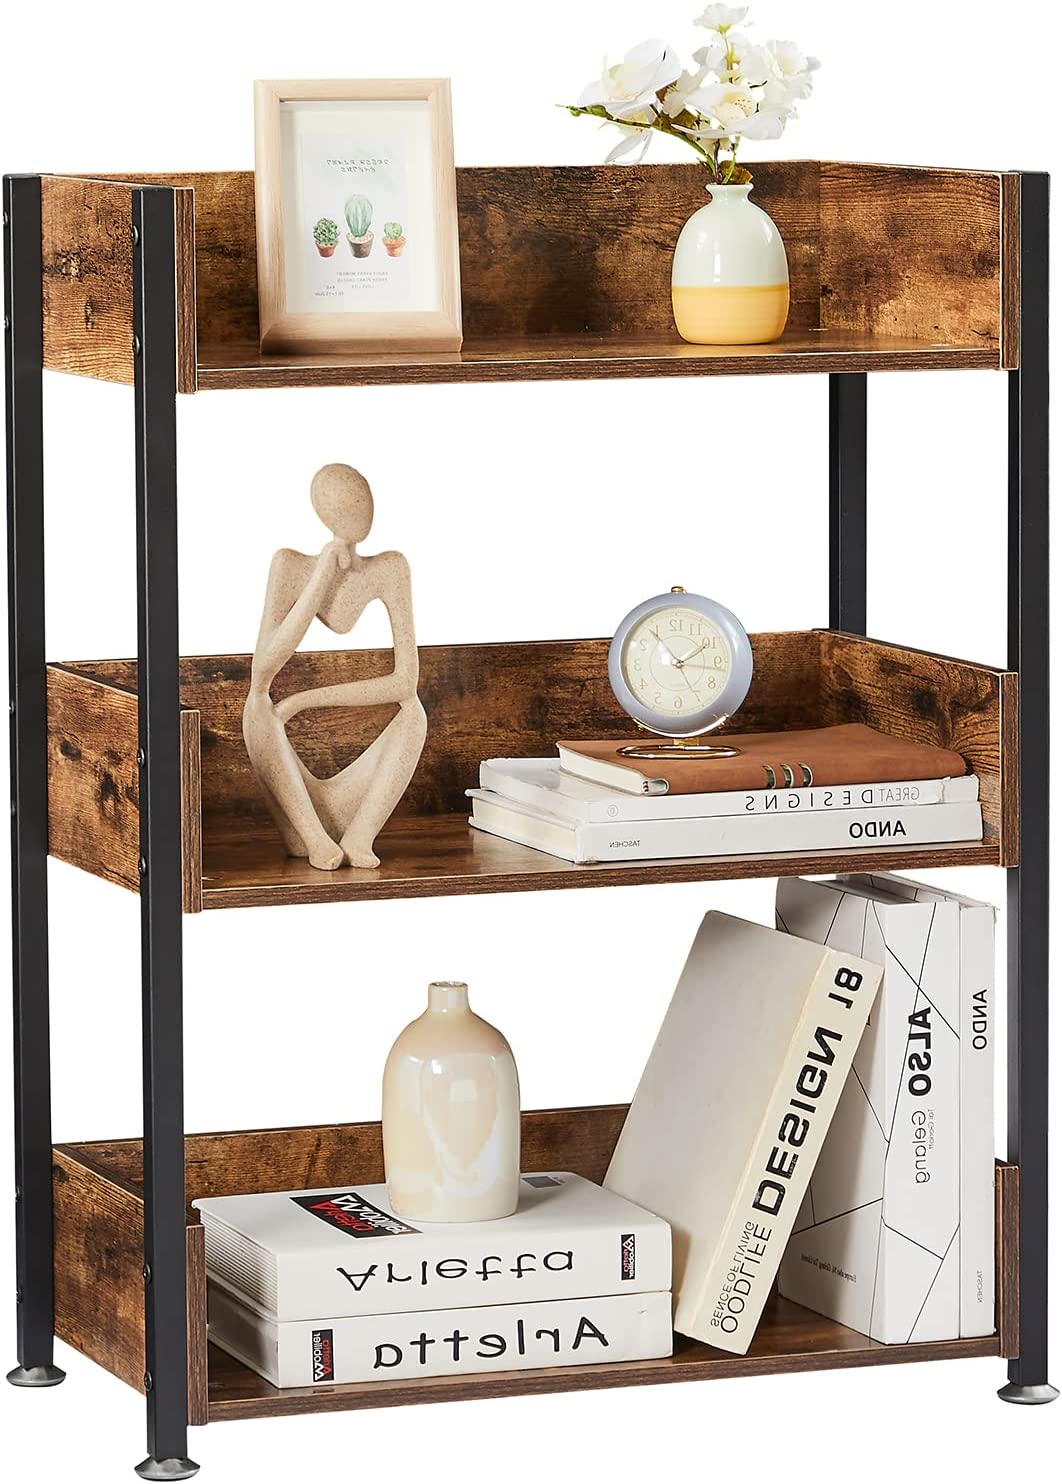 3-Tier Bookcase Small Storage Shelves